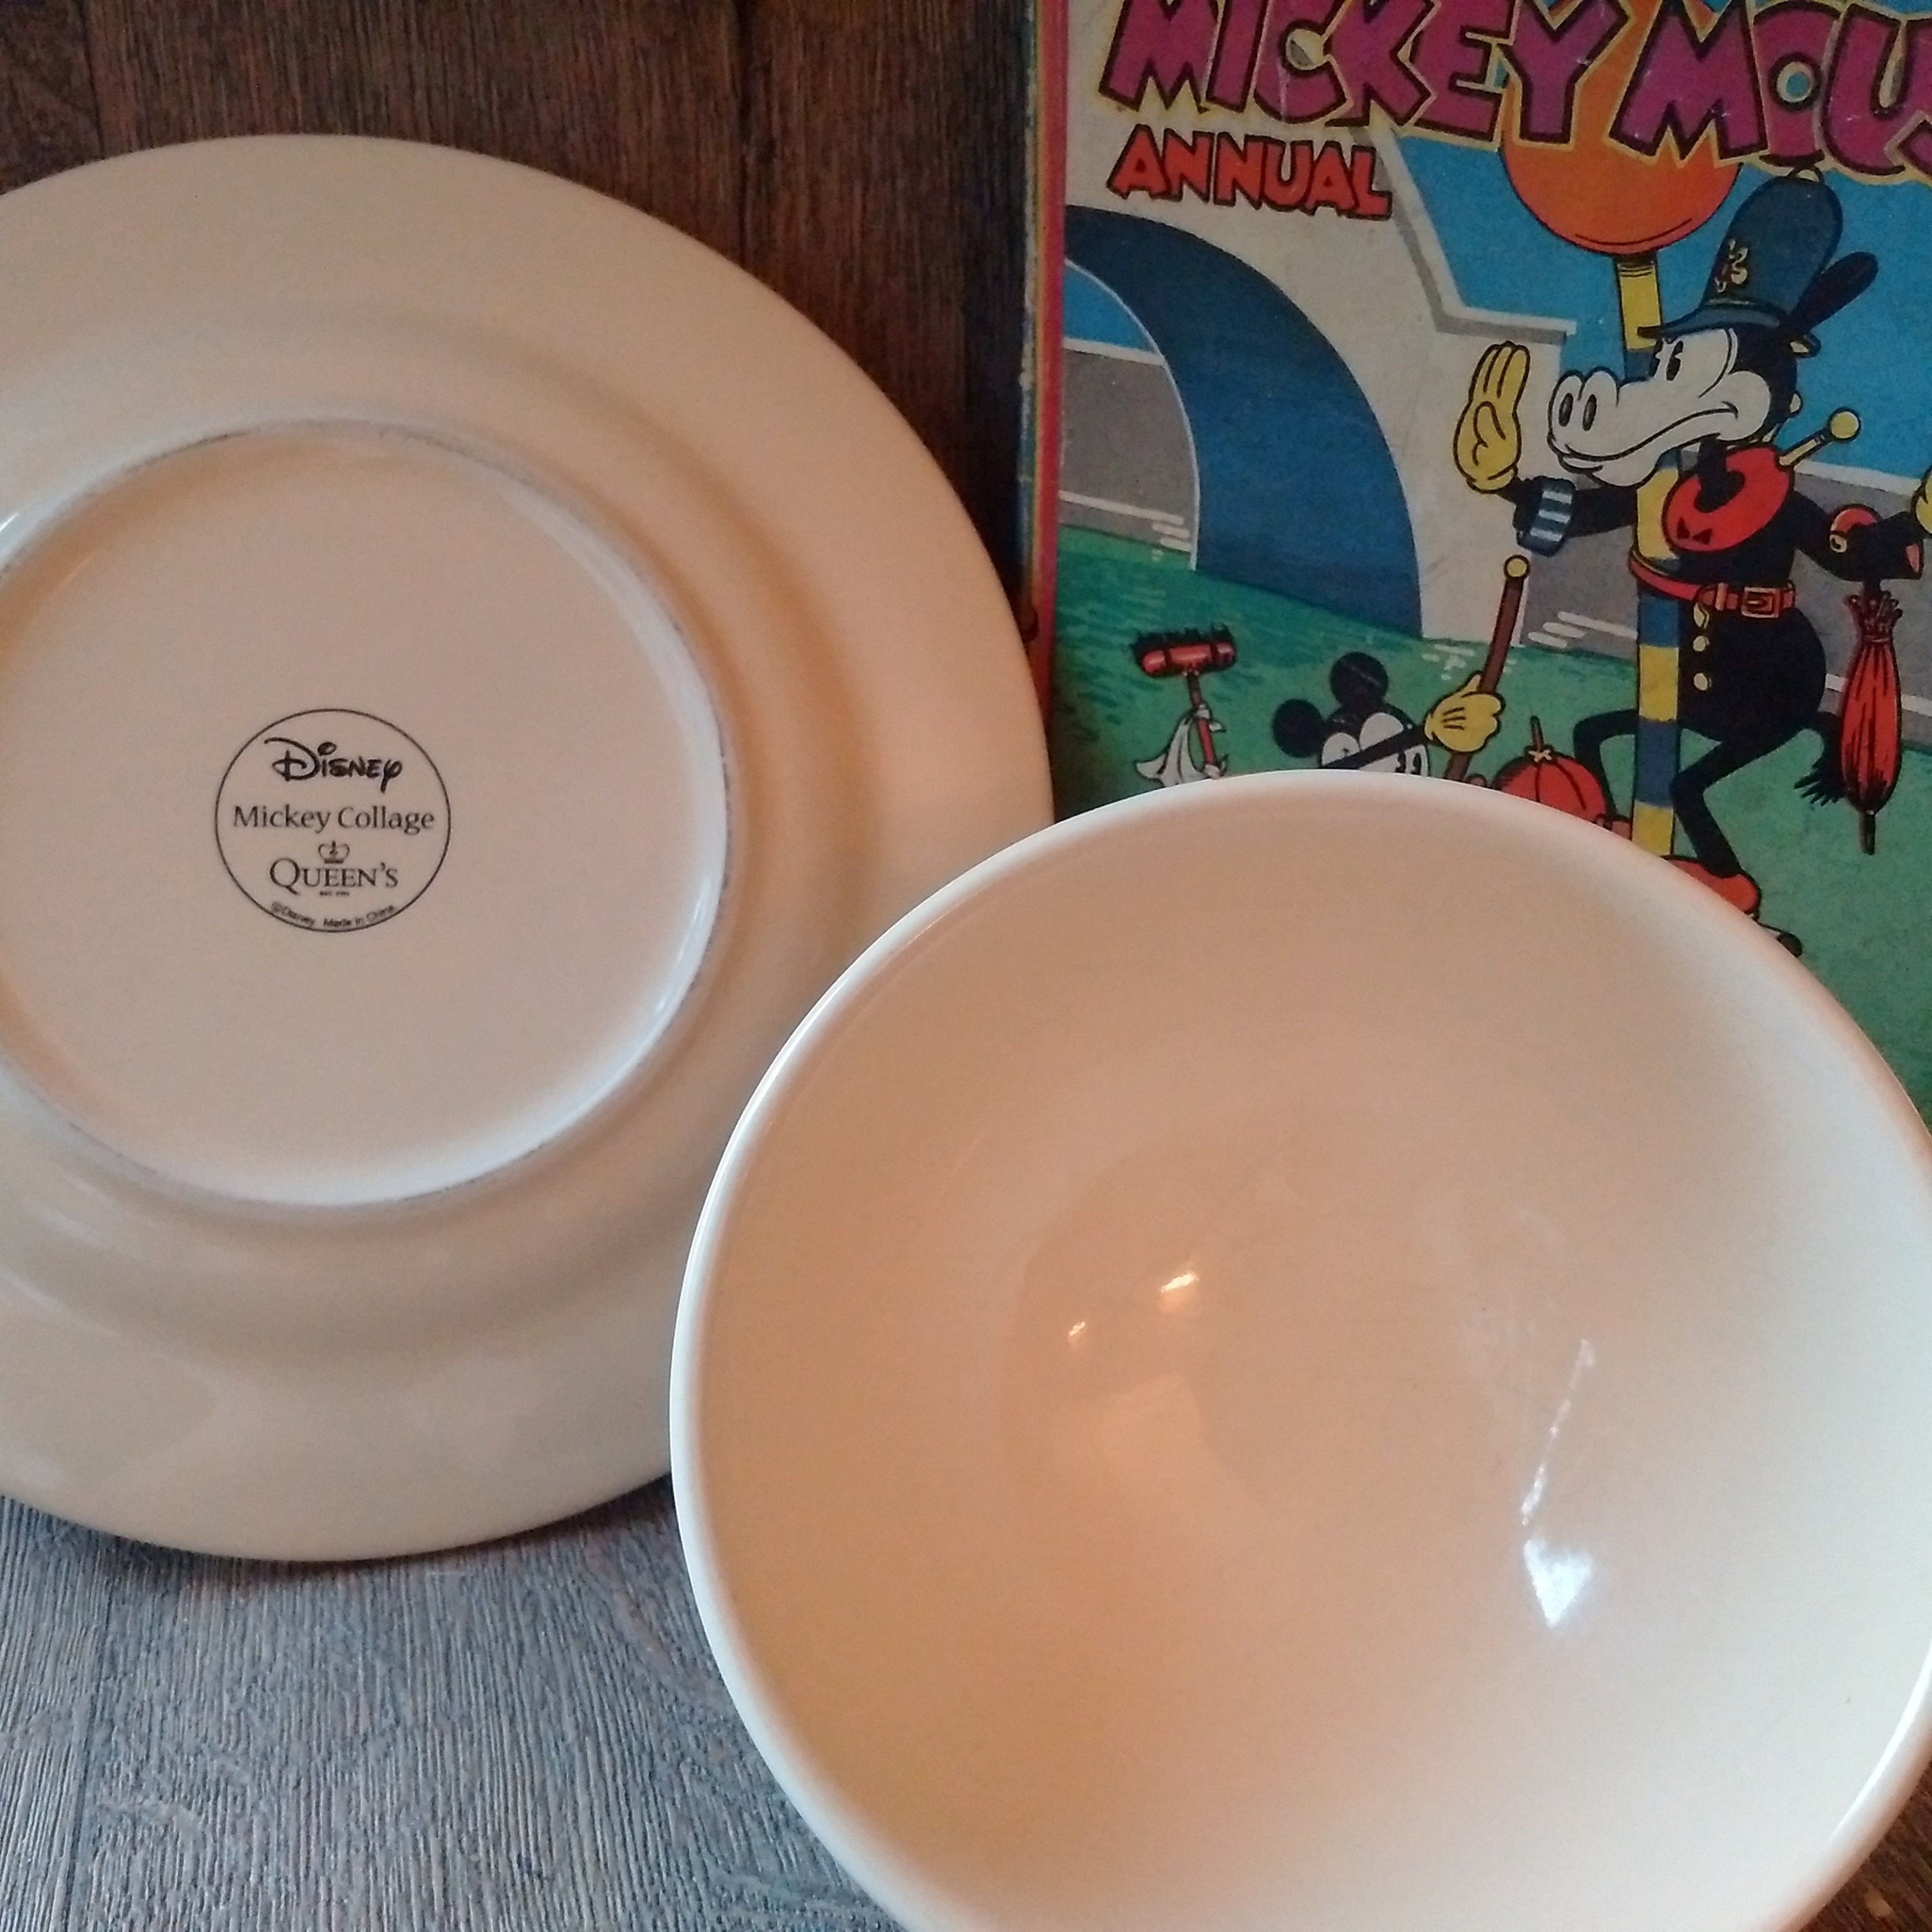 Ceramic VINTAGE MICKEY MOUSE Dinnerware Set, Disney Memorabilia